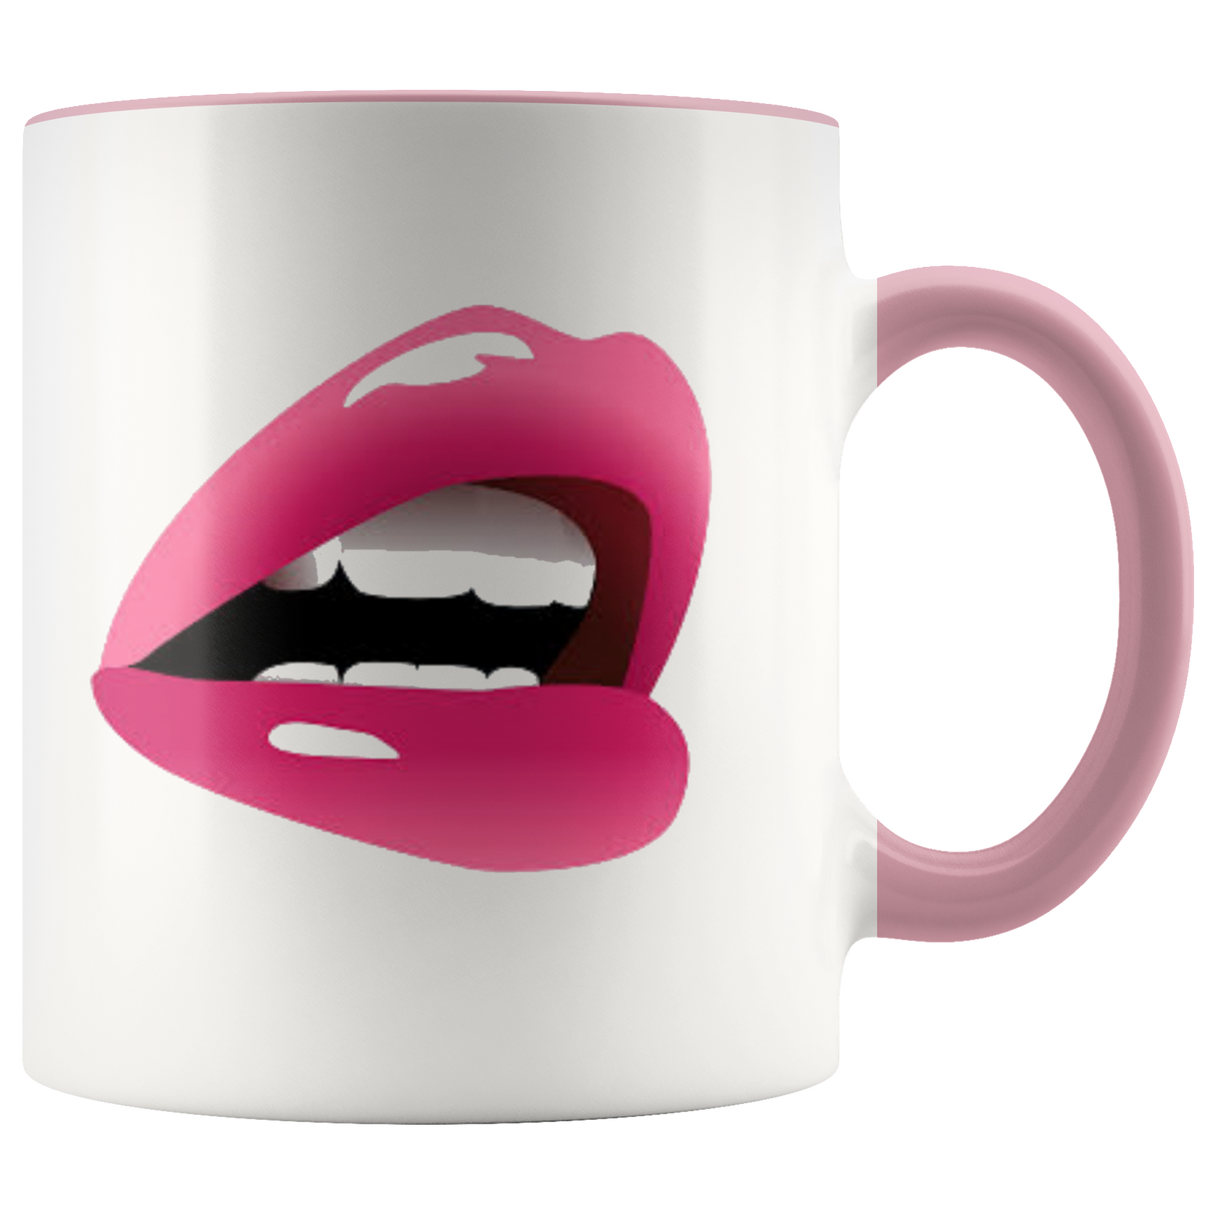 Mug Sassy Mouth Ceramic Accent Mug - Pink | Shop Sassy Chick